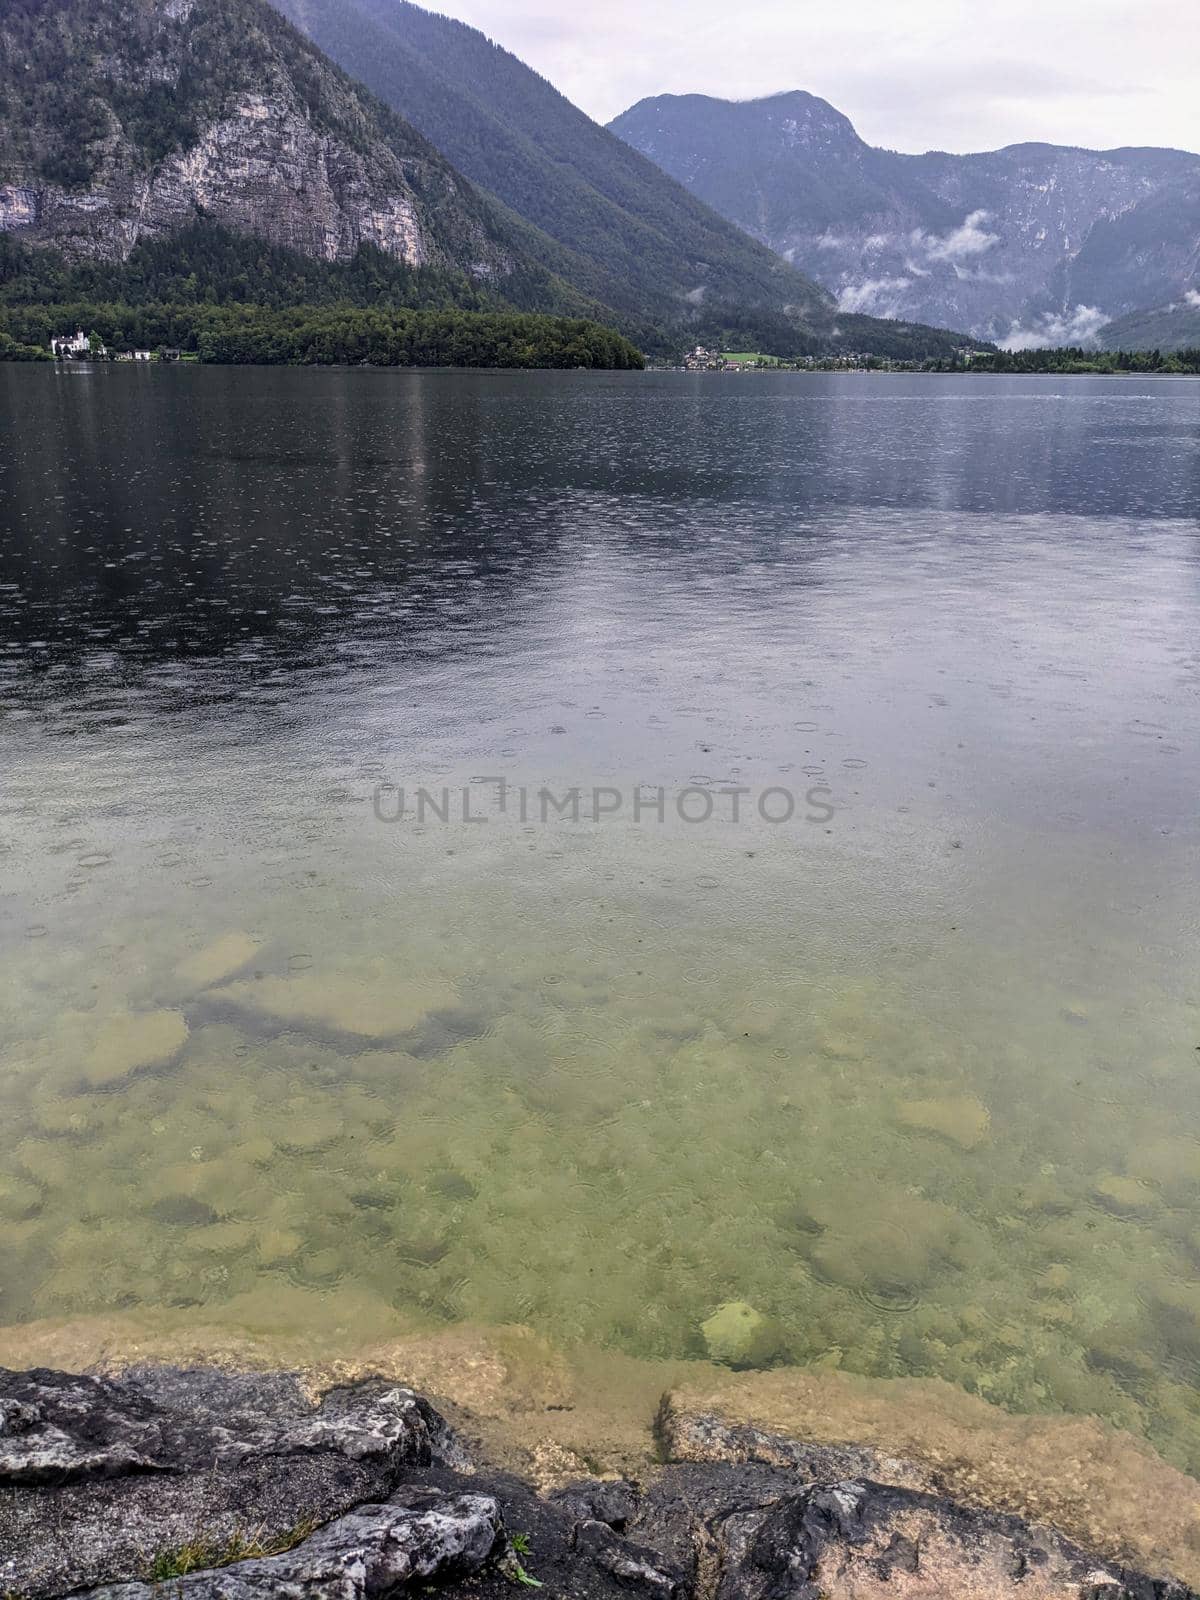 Alpine lake Hallstatter See during rain calming scene by weruskak